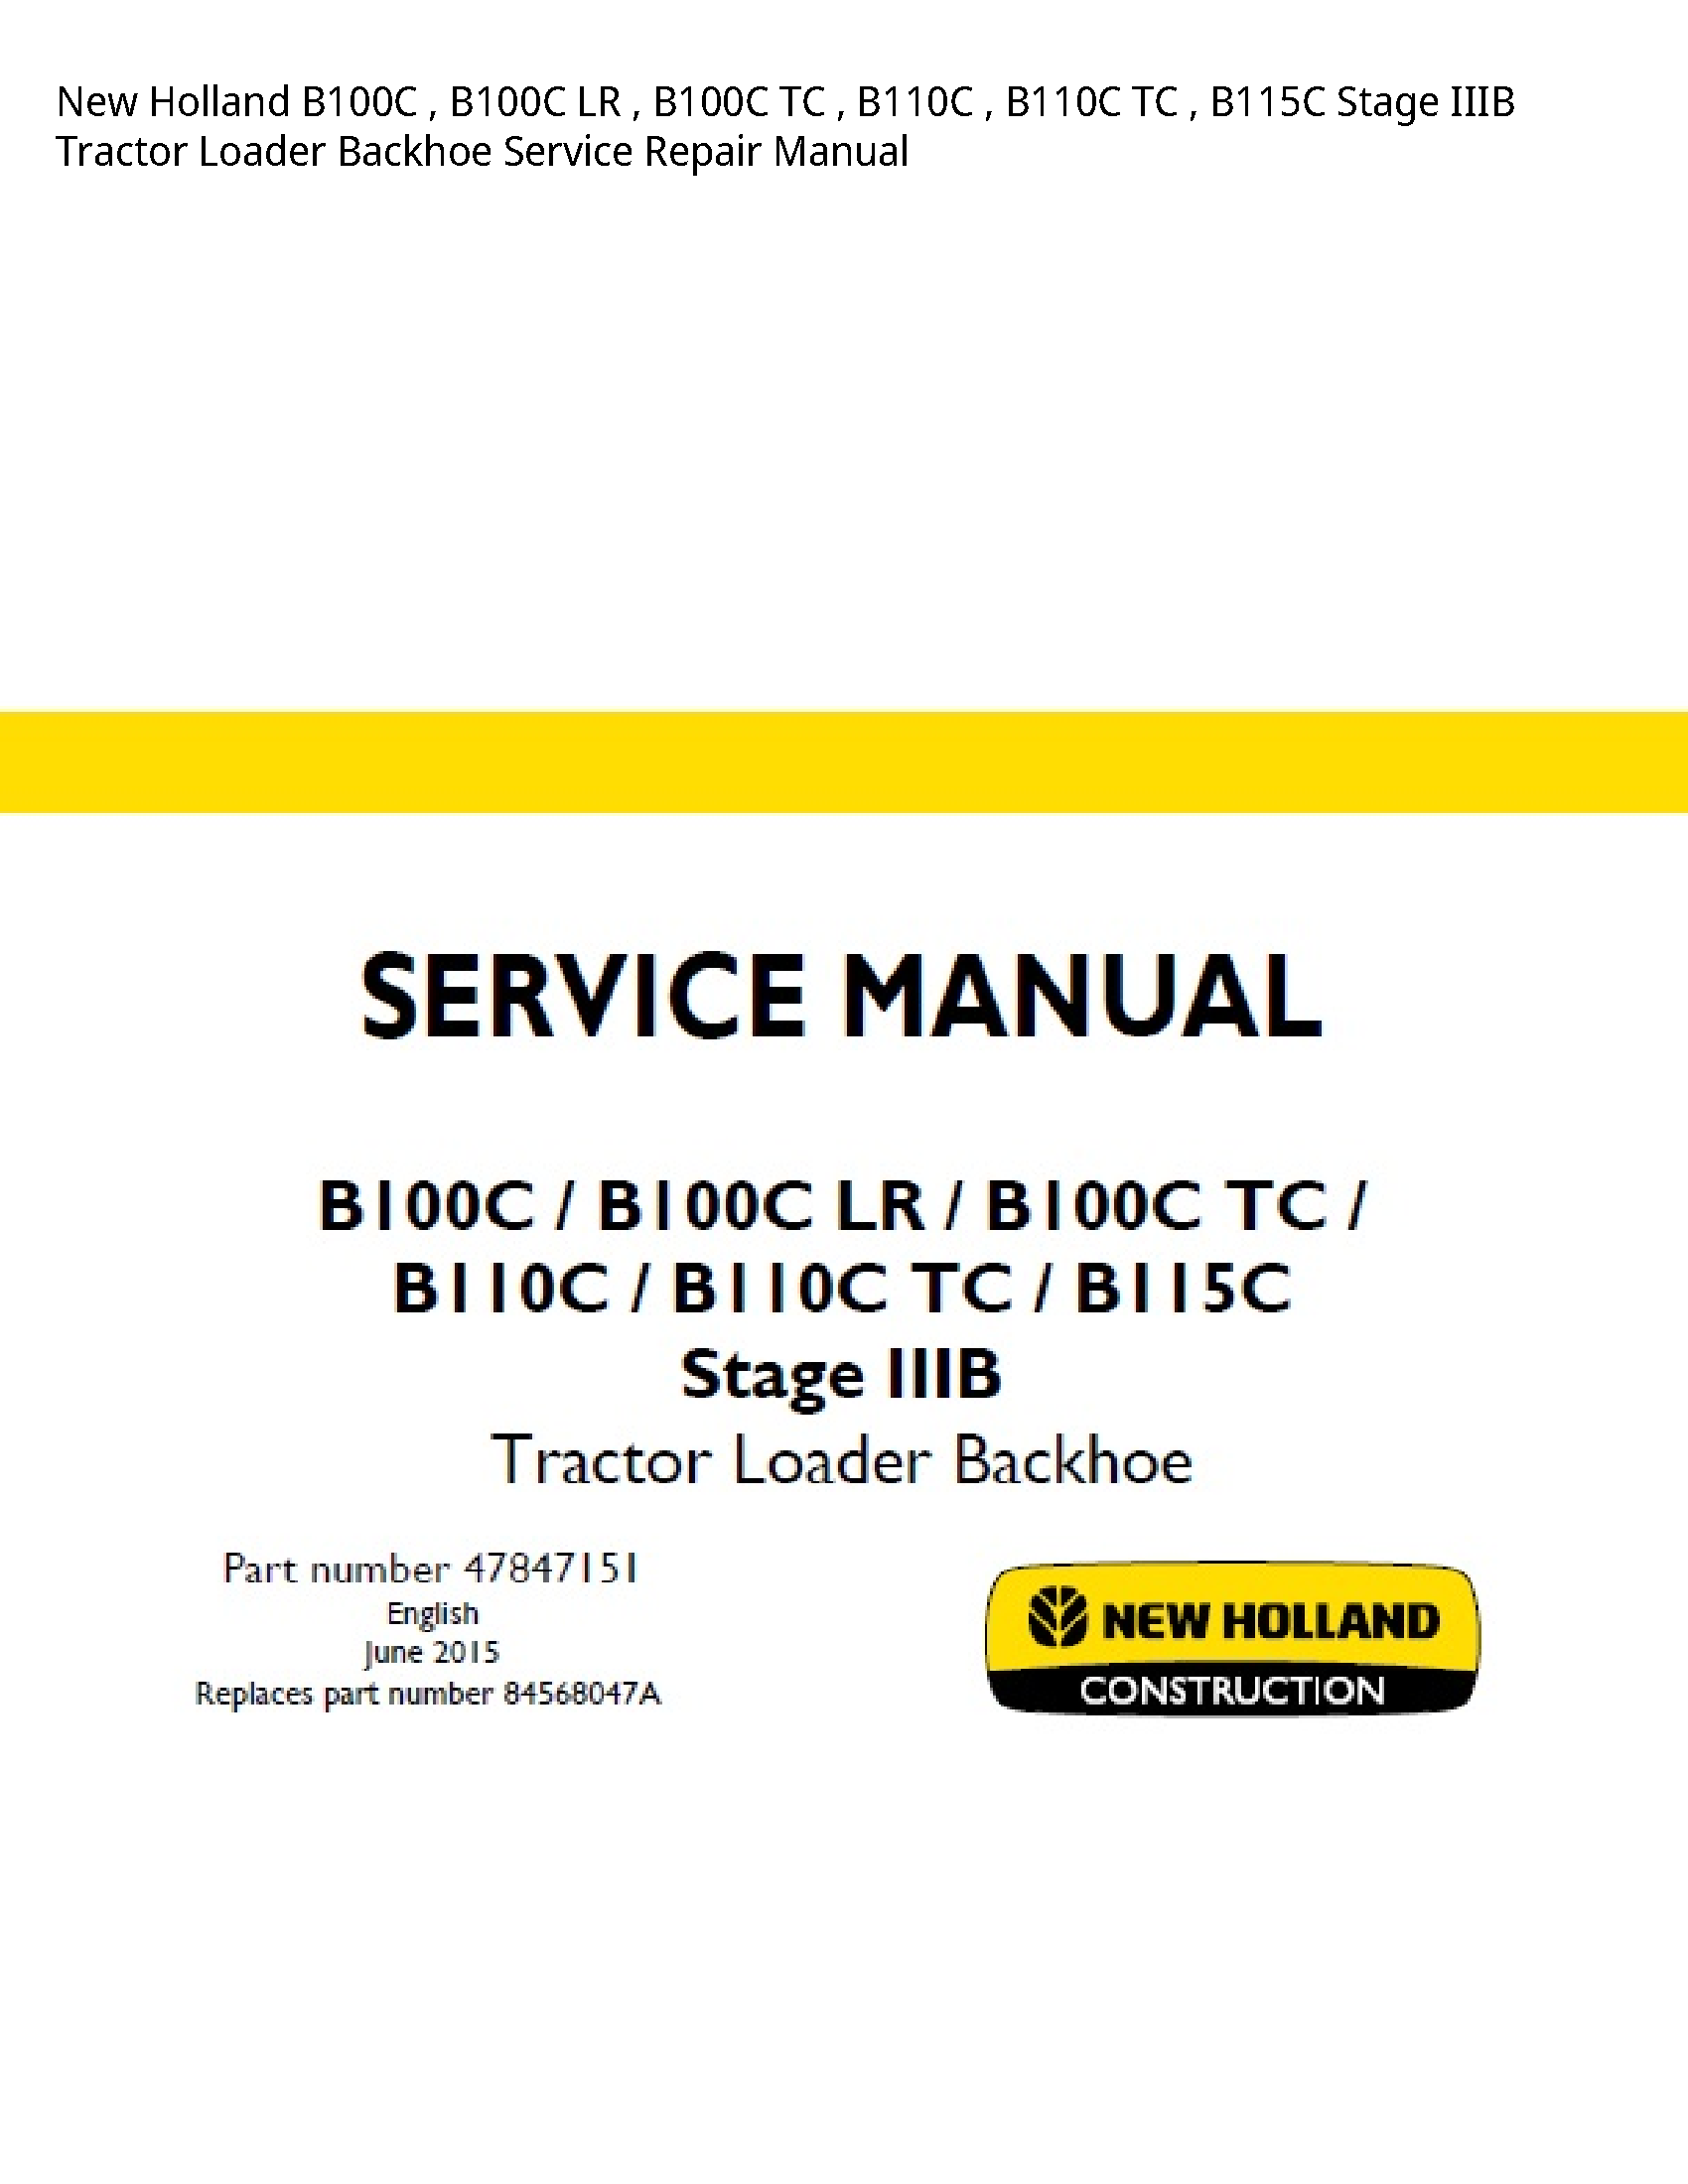 New Holland B100C LR TC TC Stage IIIB Tractor Loader Backhoe manual